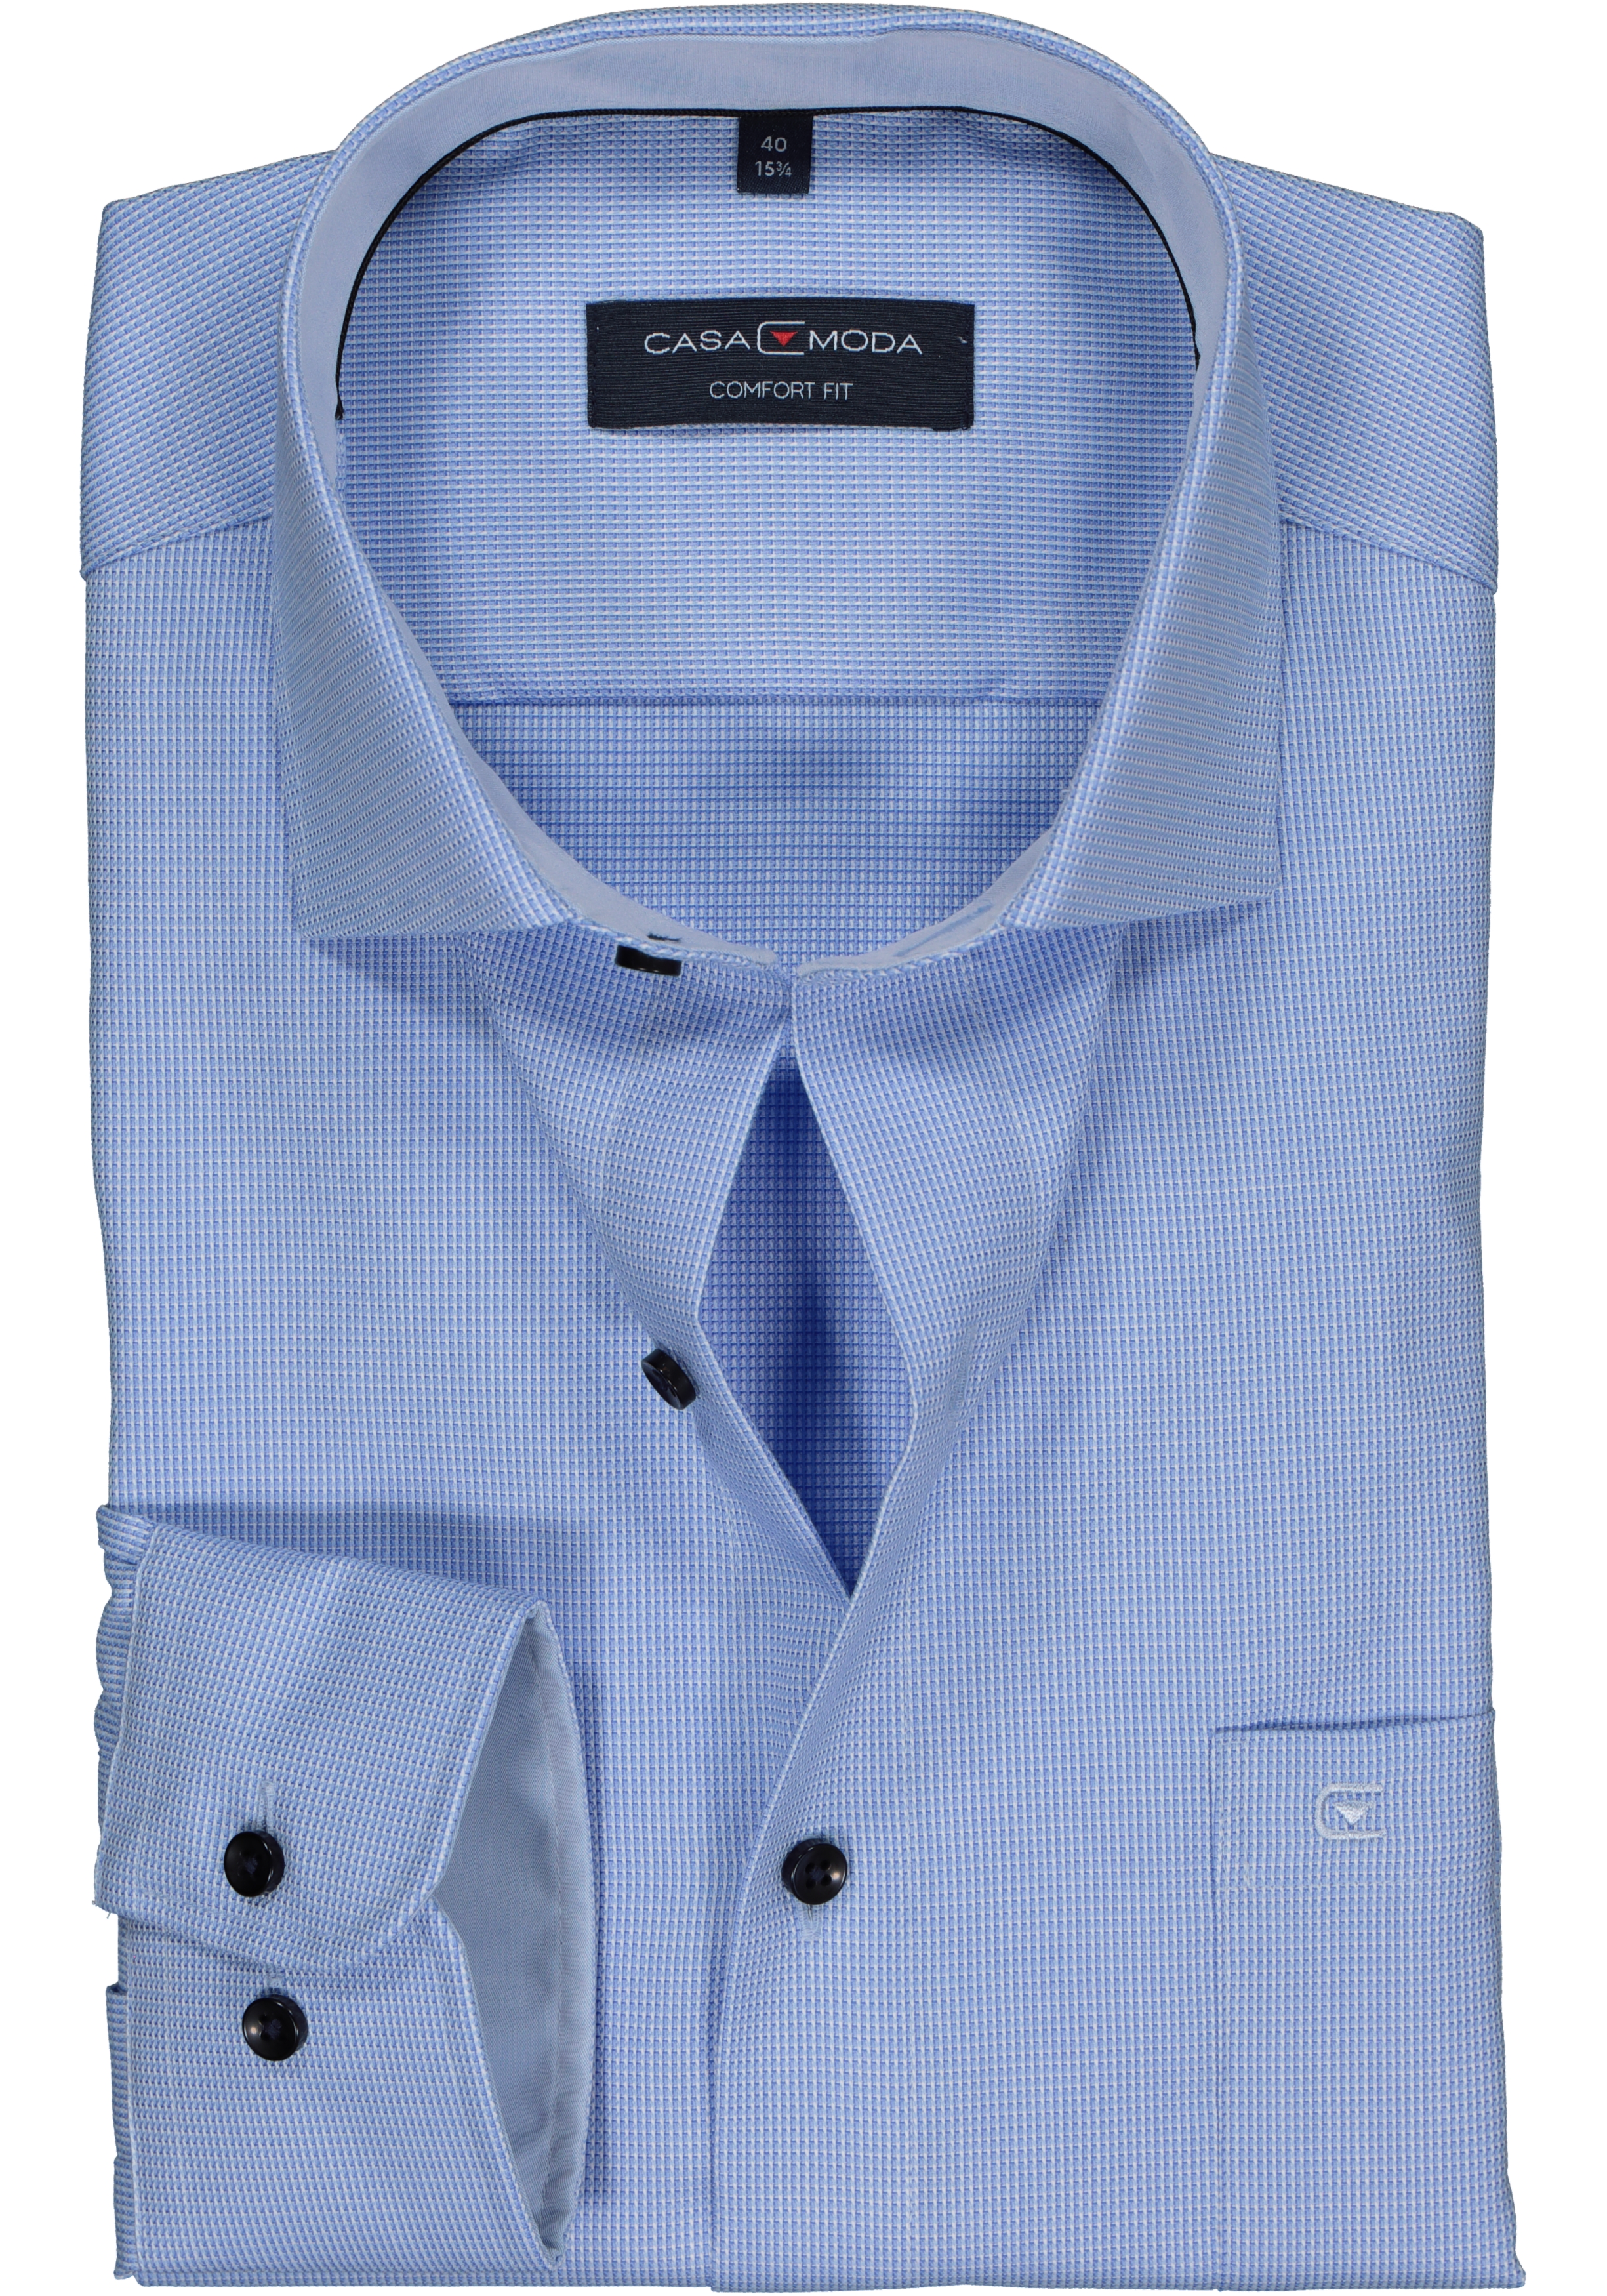 CASA MODA comfort fit overhemd, lichtblauw met wit structuur mini dessin (contrast) 